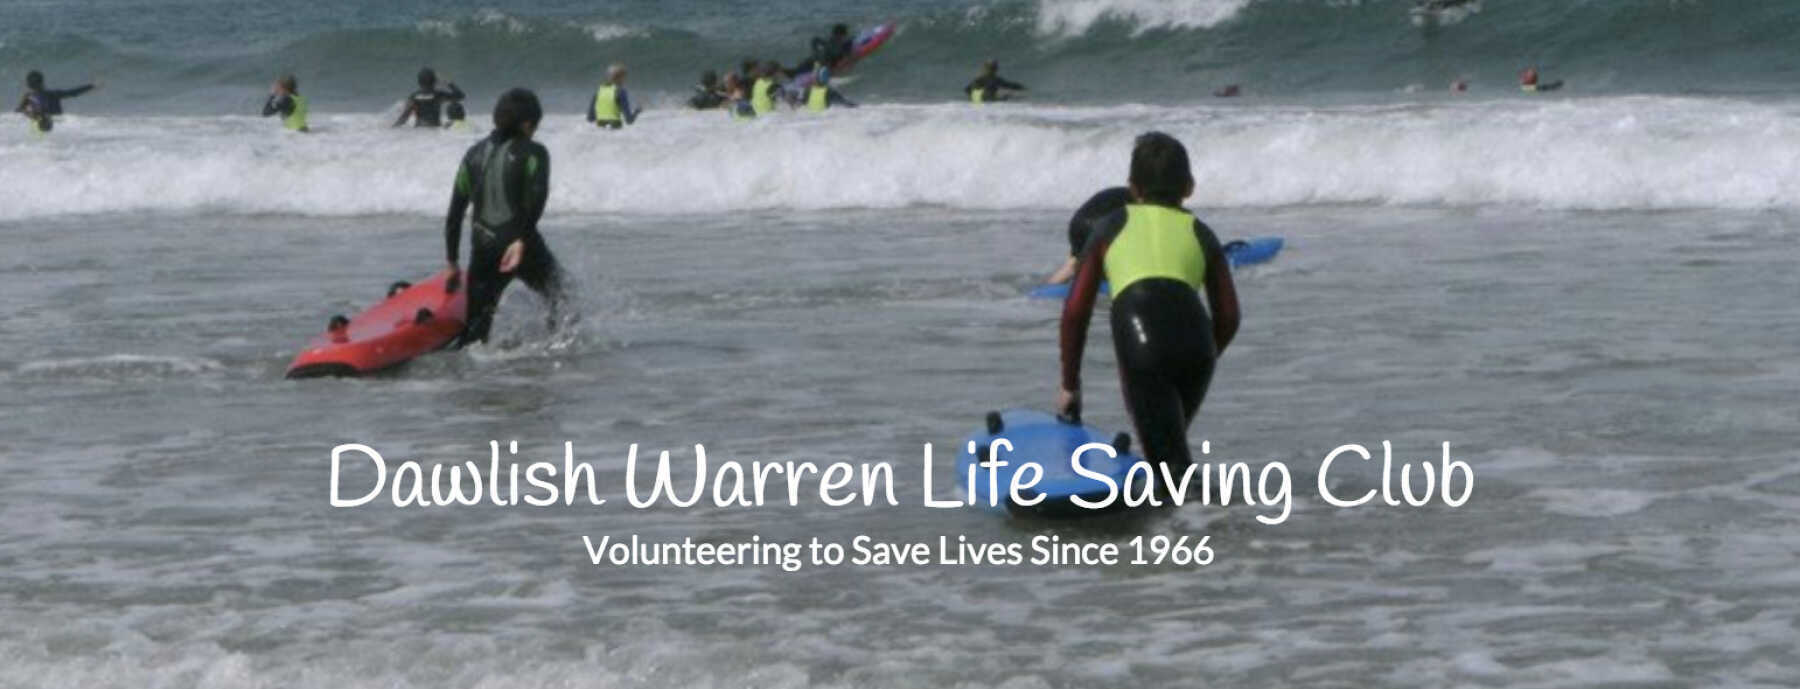 Featured Image for Dawlish Warren Life Saving Club